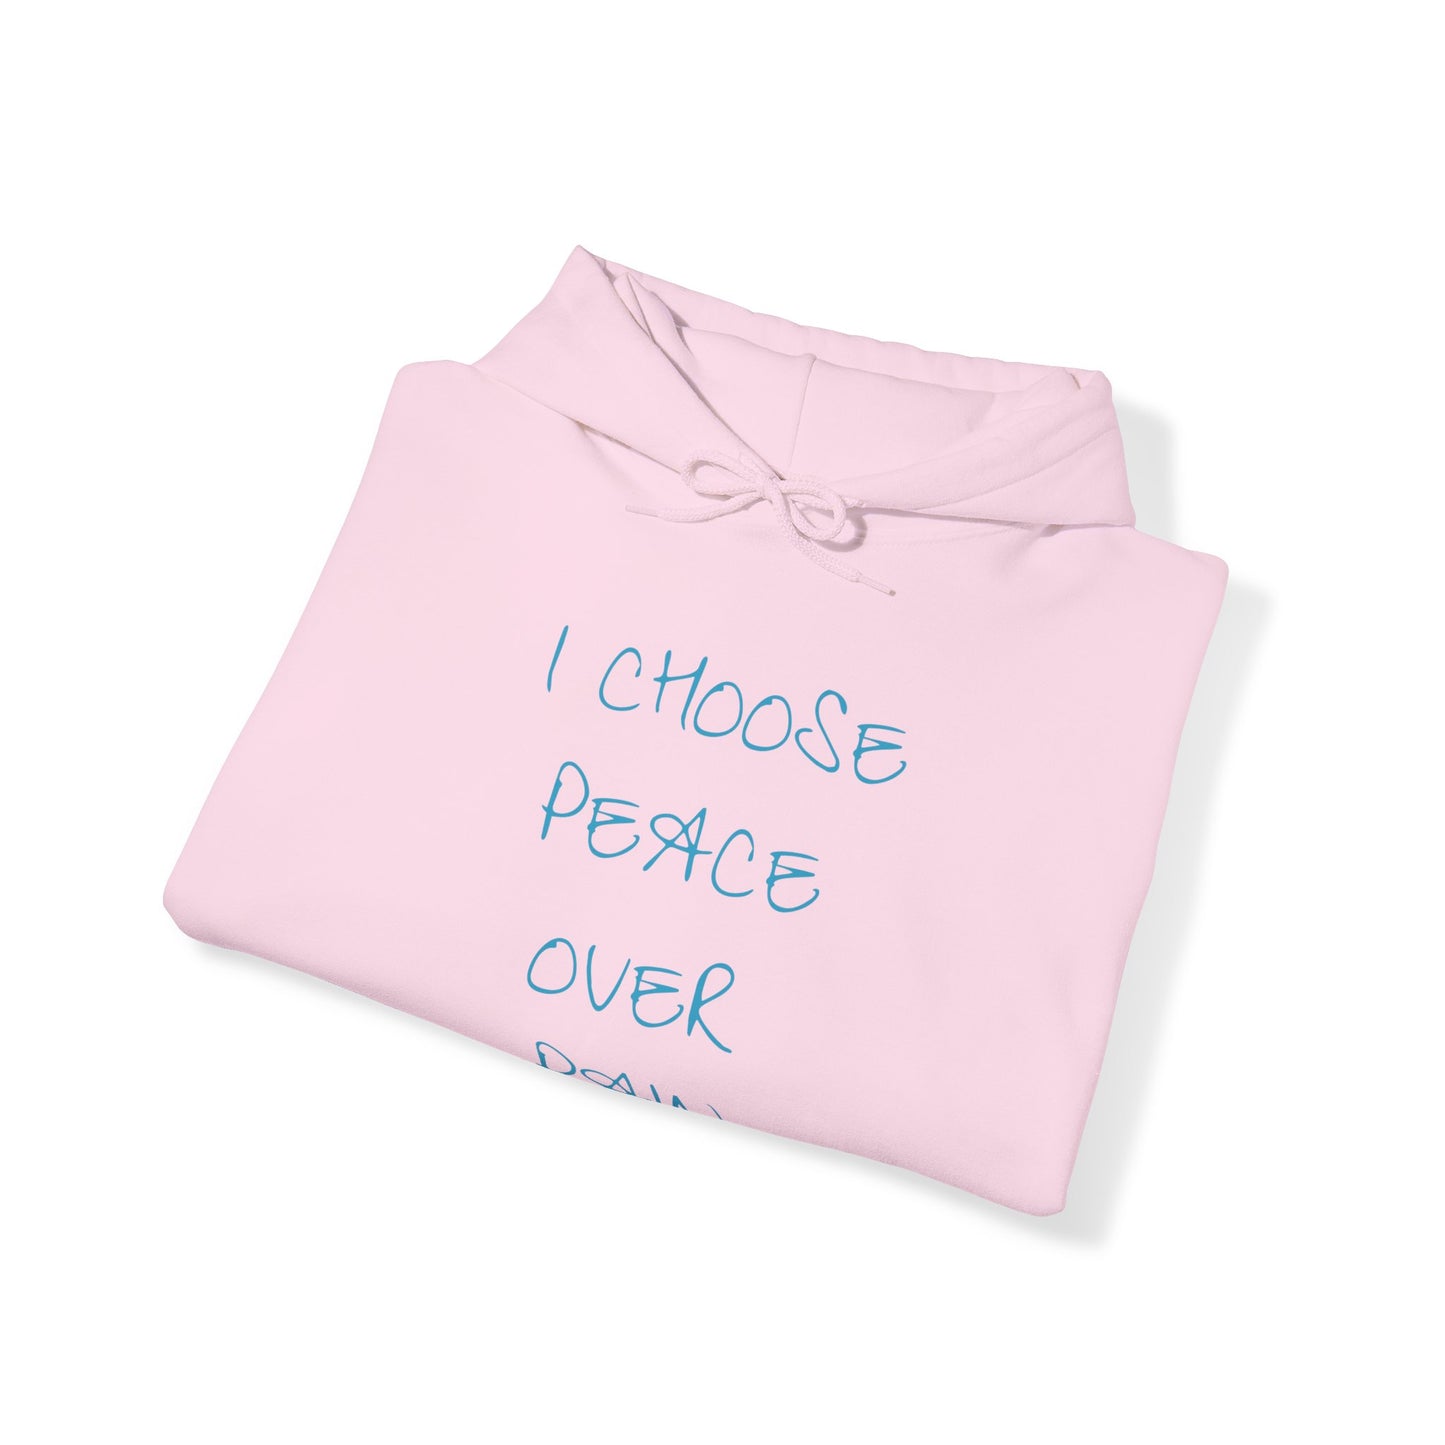 I Choose Peace Over Pain Hoodie Sweatshirt